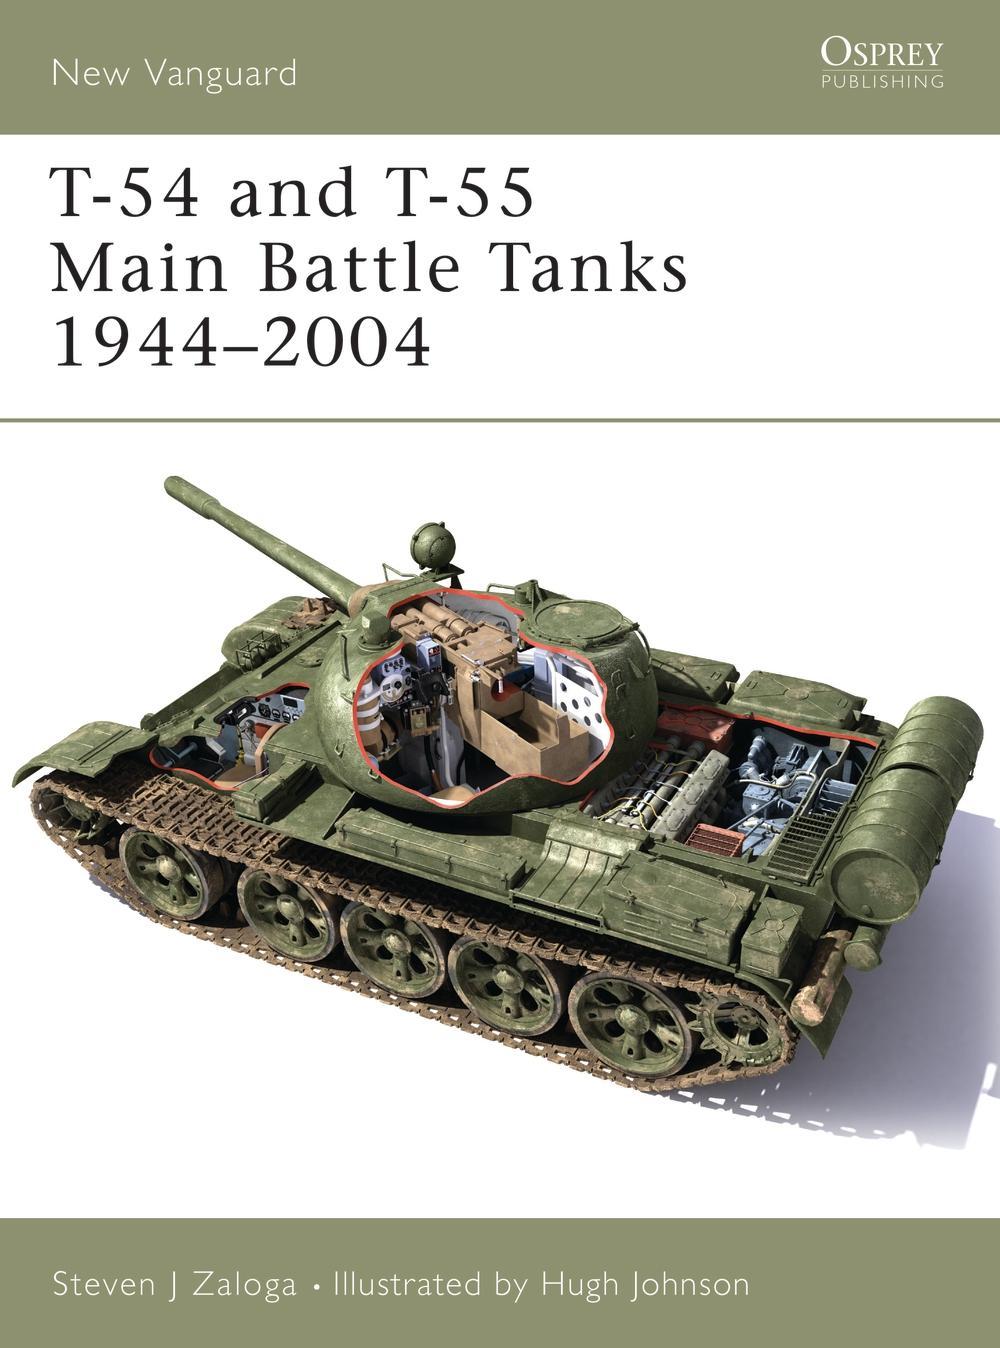 T-54 and T-55 Main Battle Tanks 1958-2004 - Steven J. Zaloga